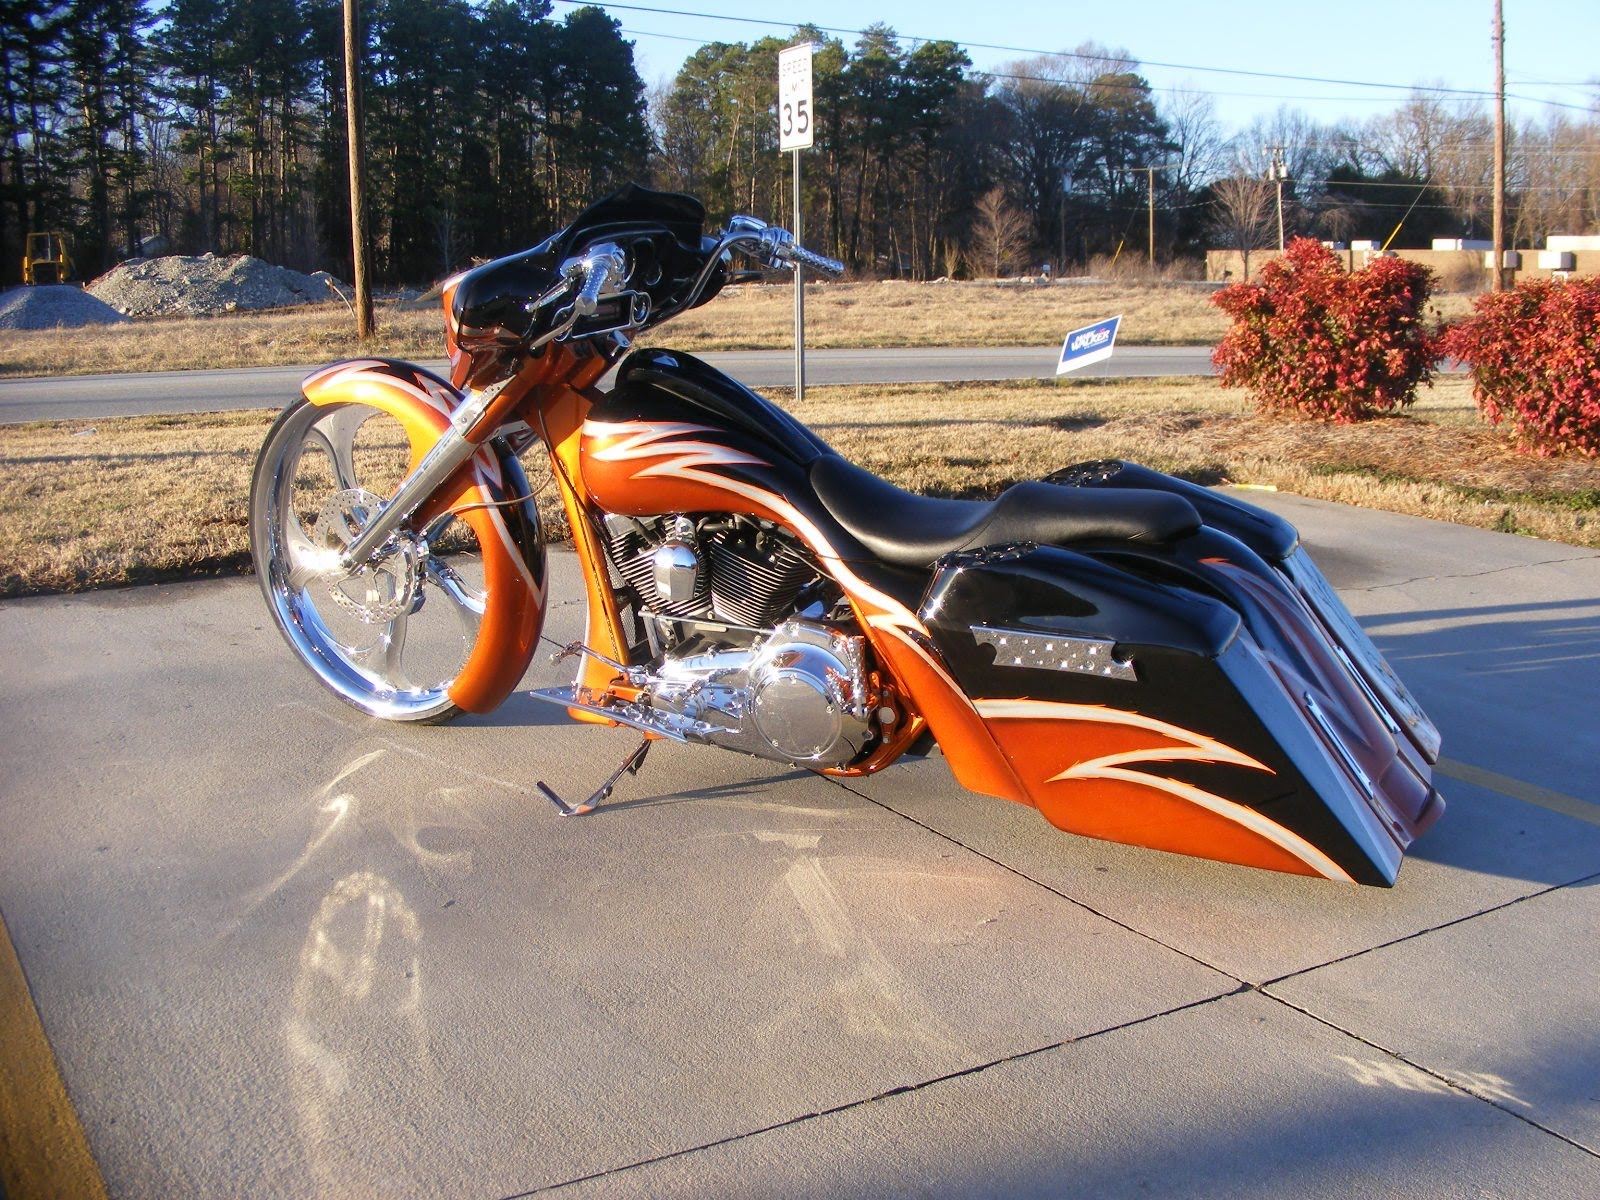 BAGGER Harley Davidson 30 INCH WHeel - HDwallpaper4U.com